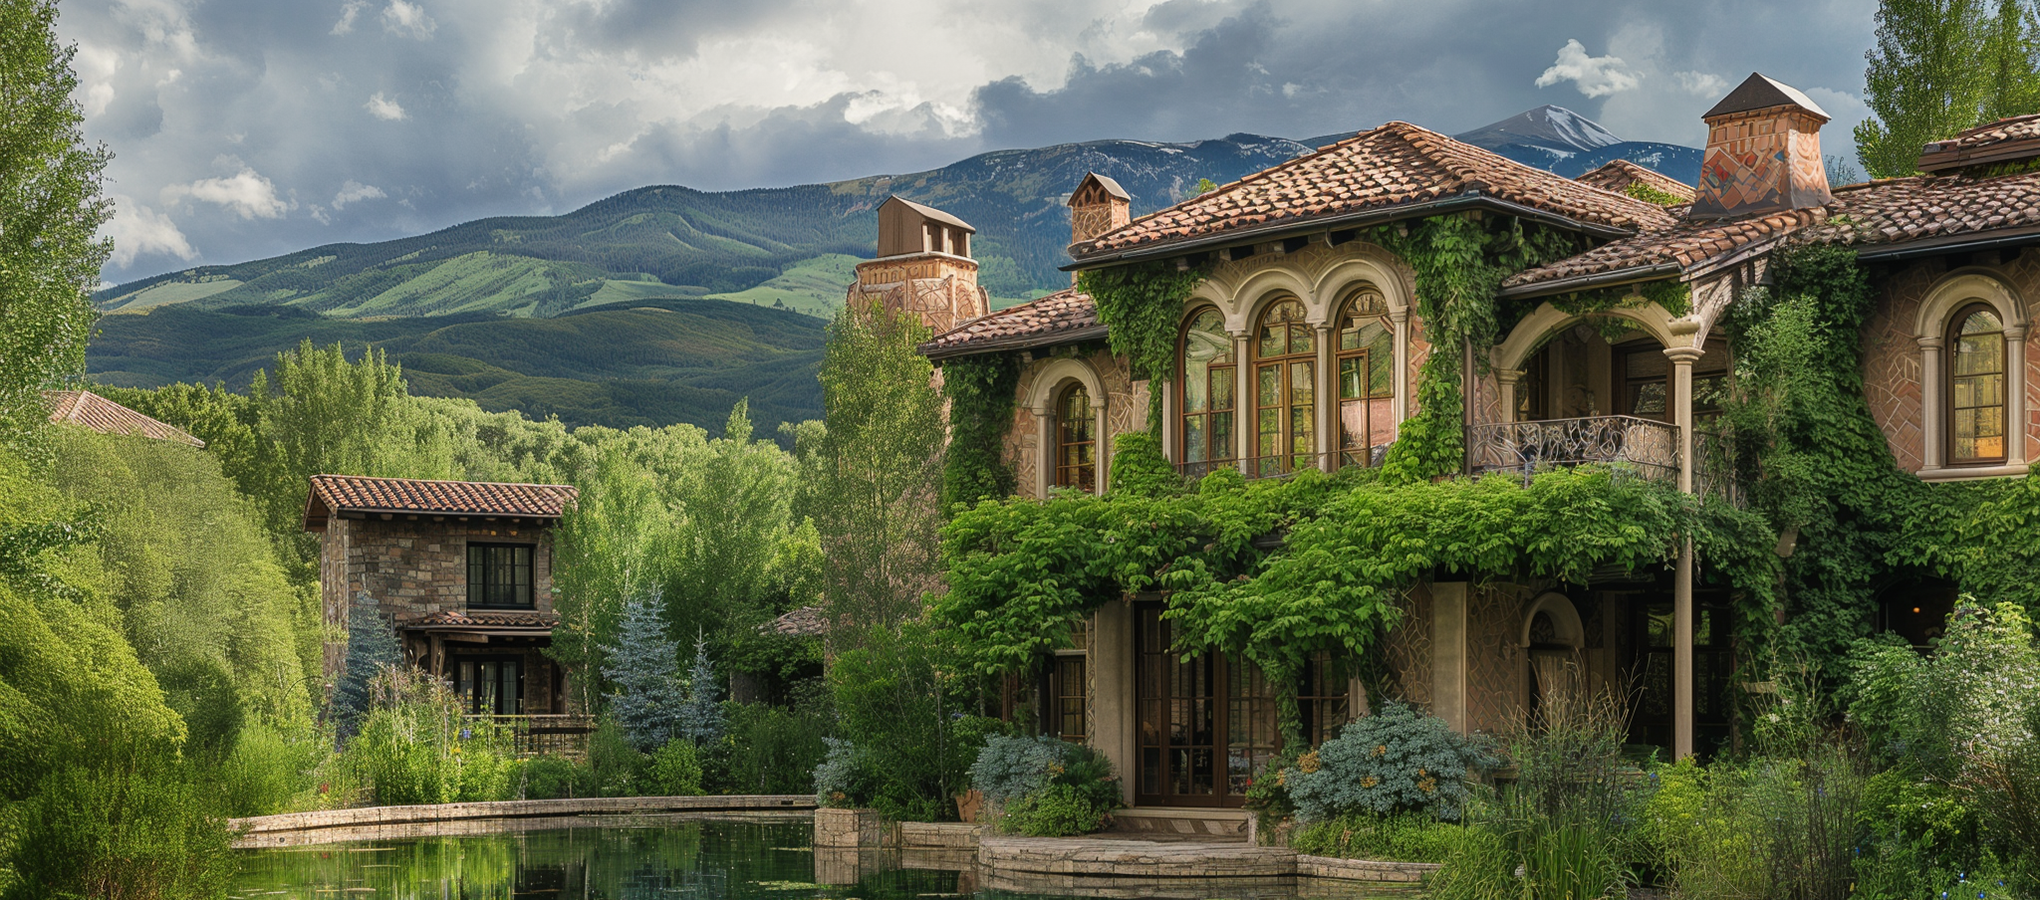 Homes for Sale in Colorado Springs